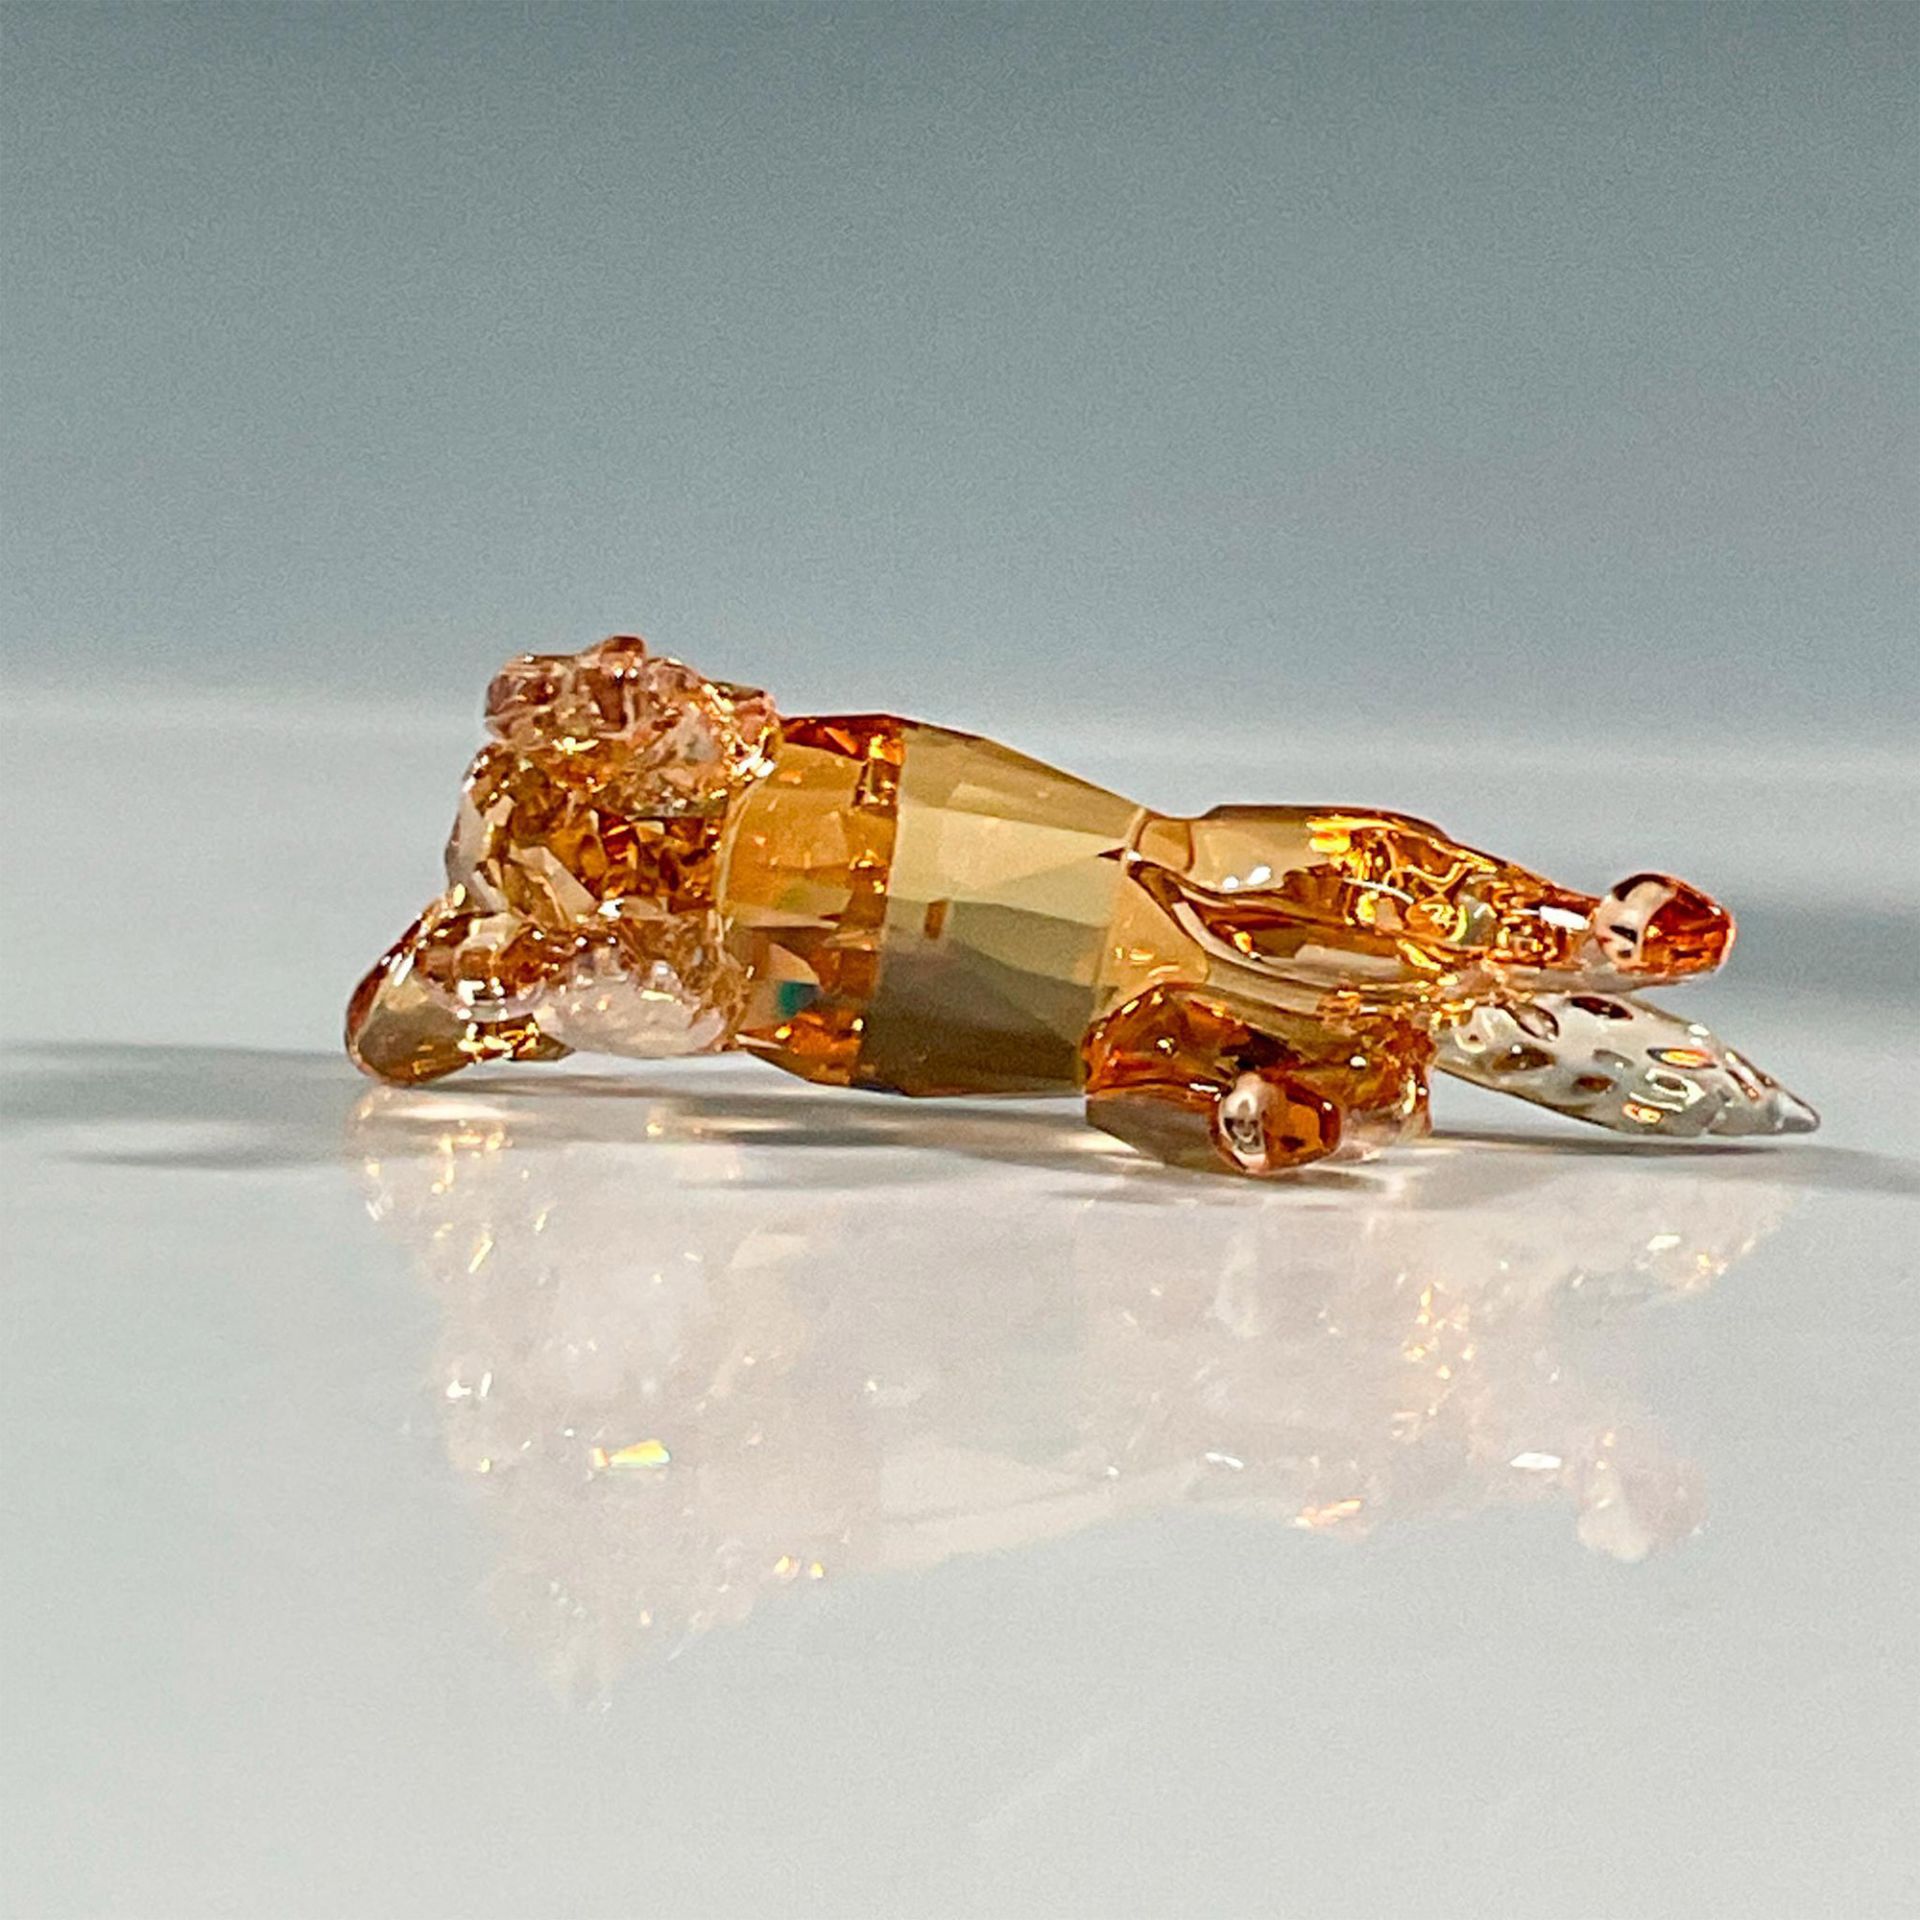 Swarovski Crystal Figurine, Golden Retriever Mother - Image 4 of 4